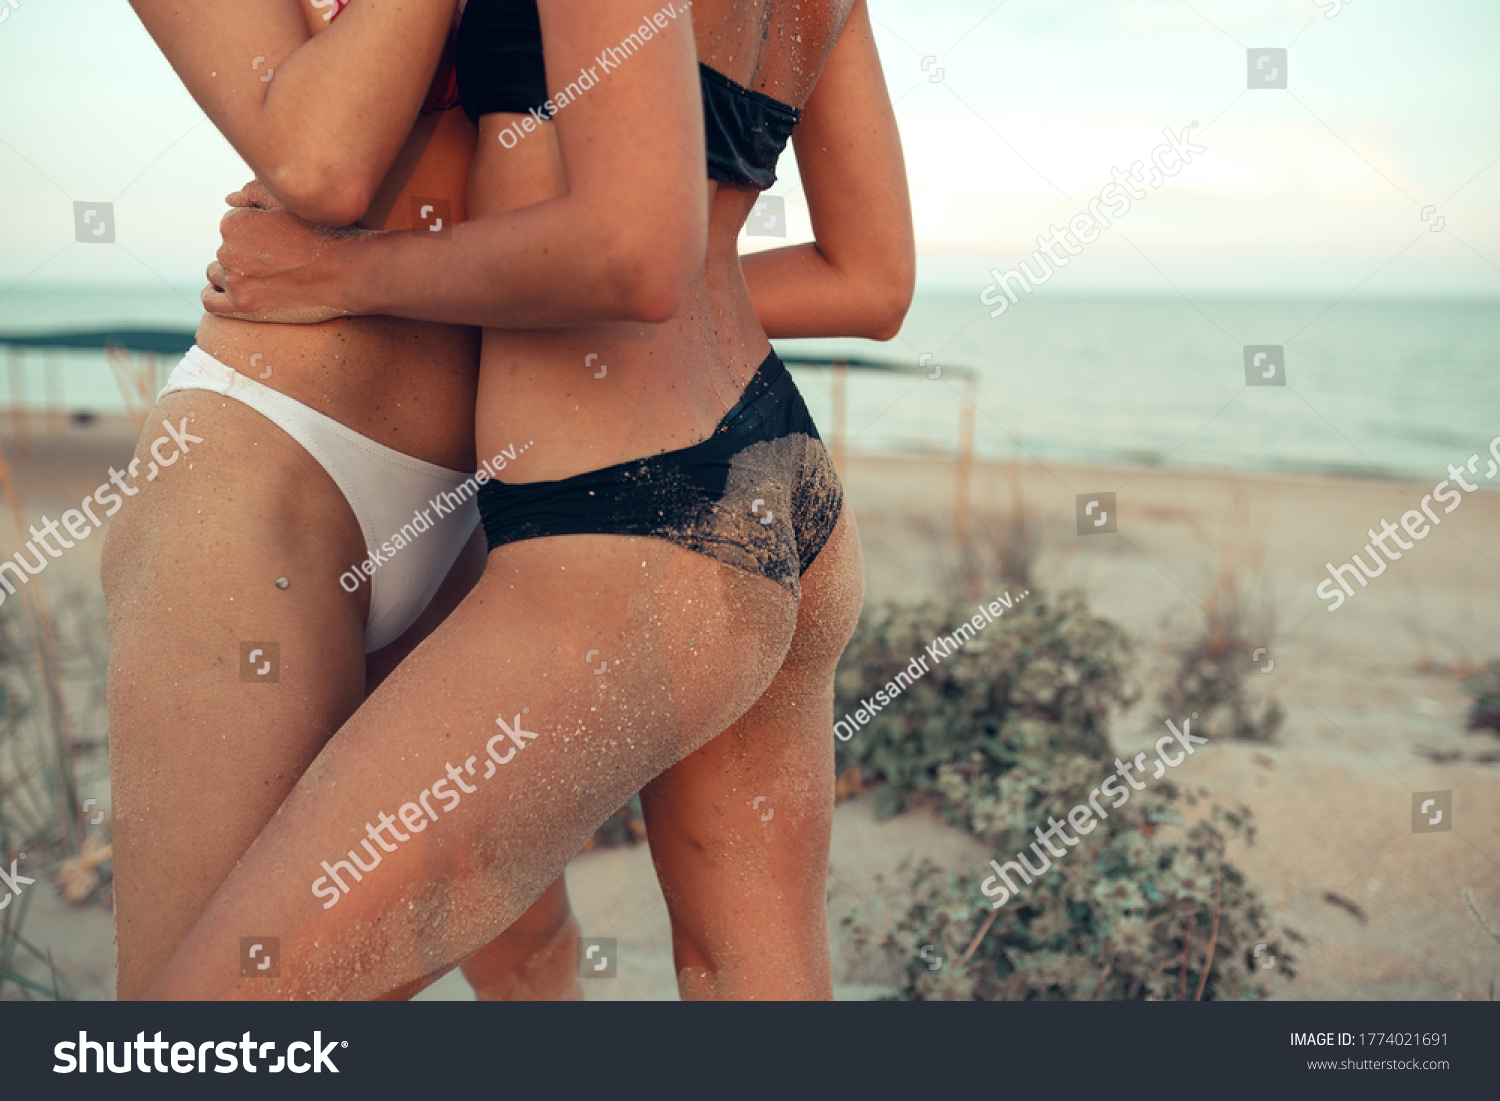 Women In Bikinis Lesbian